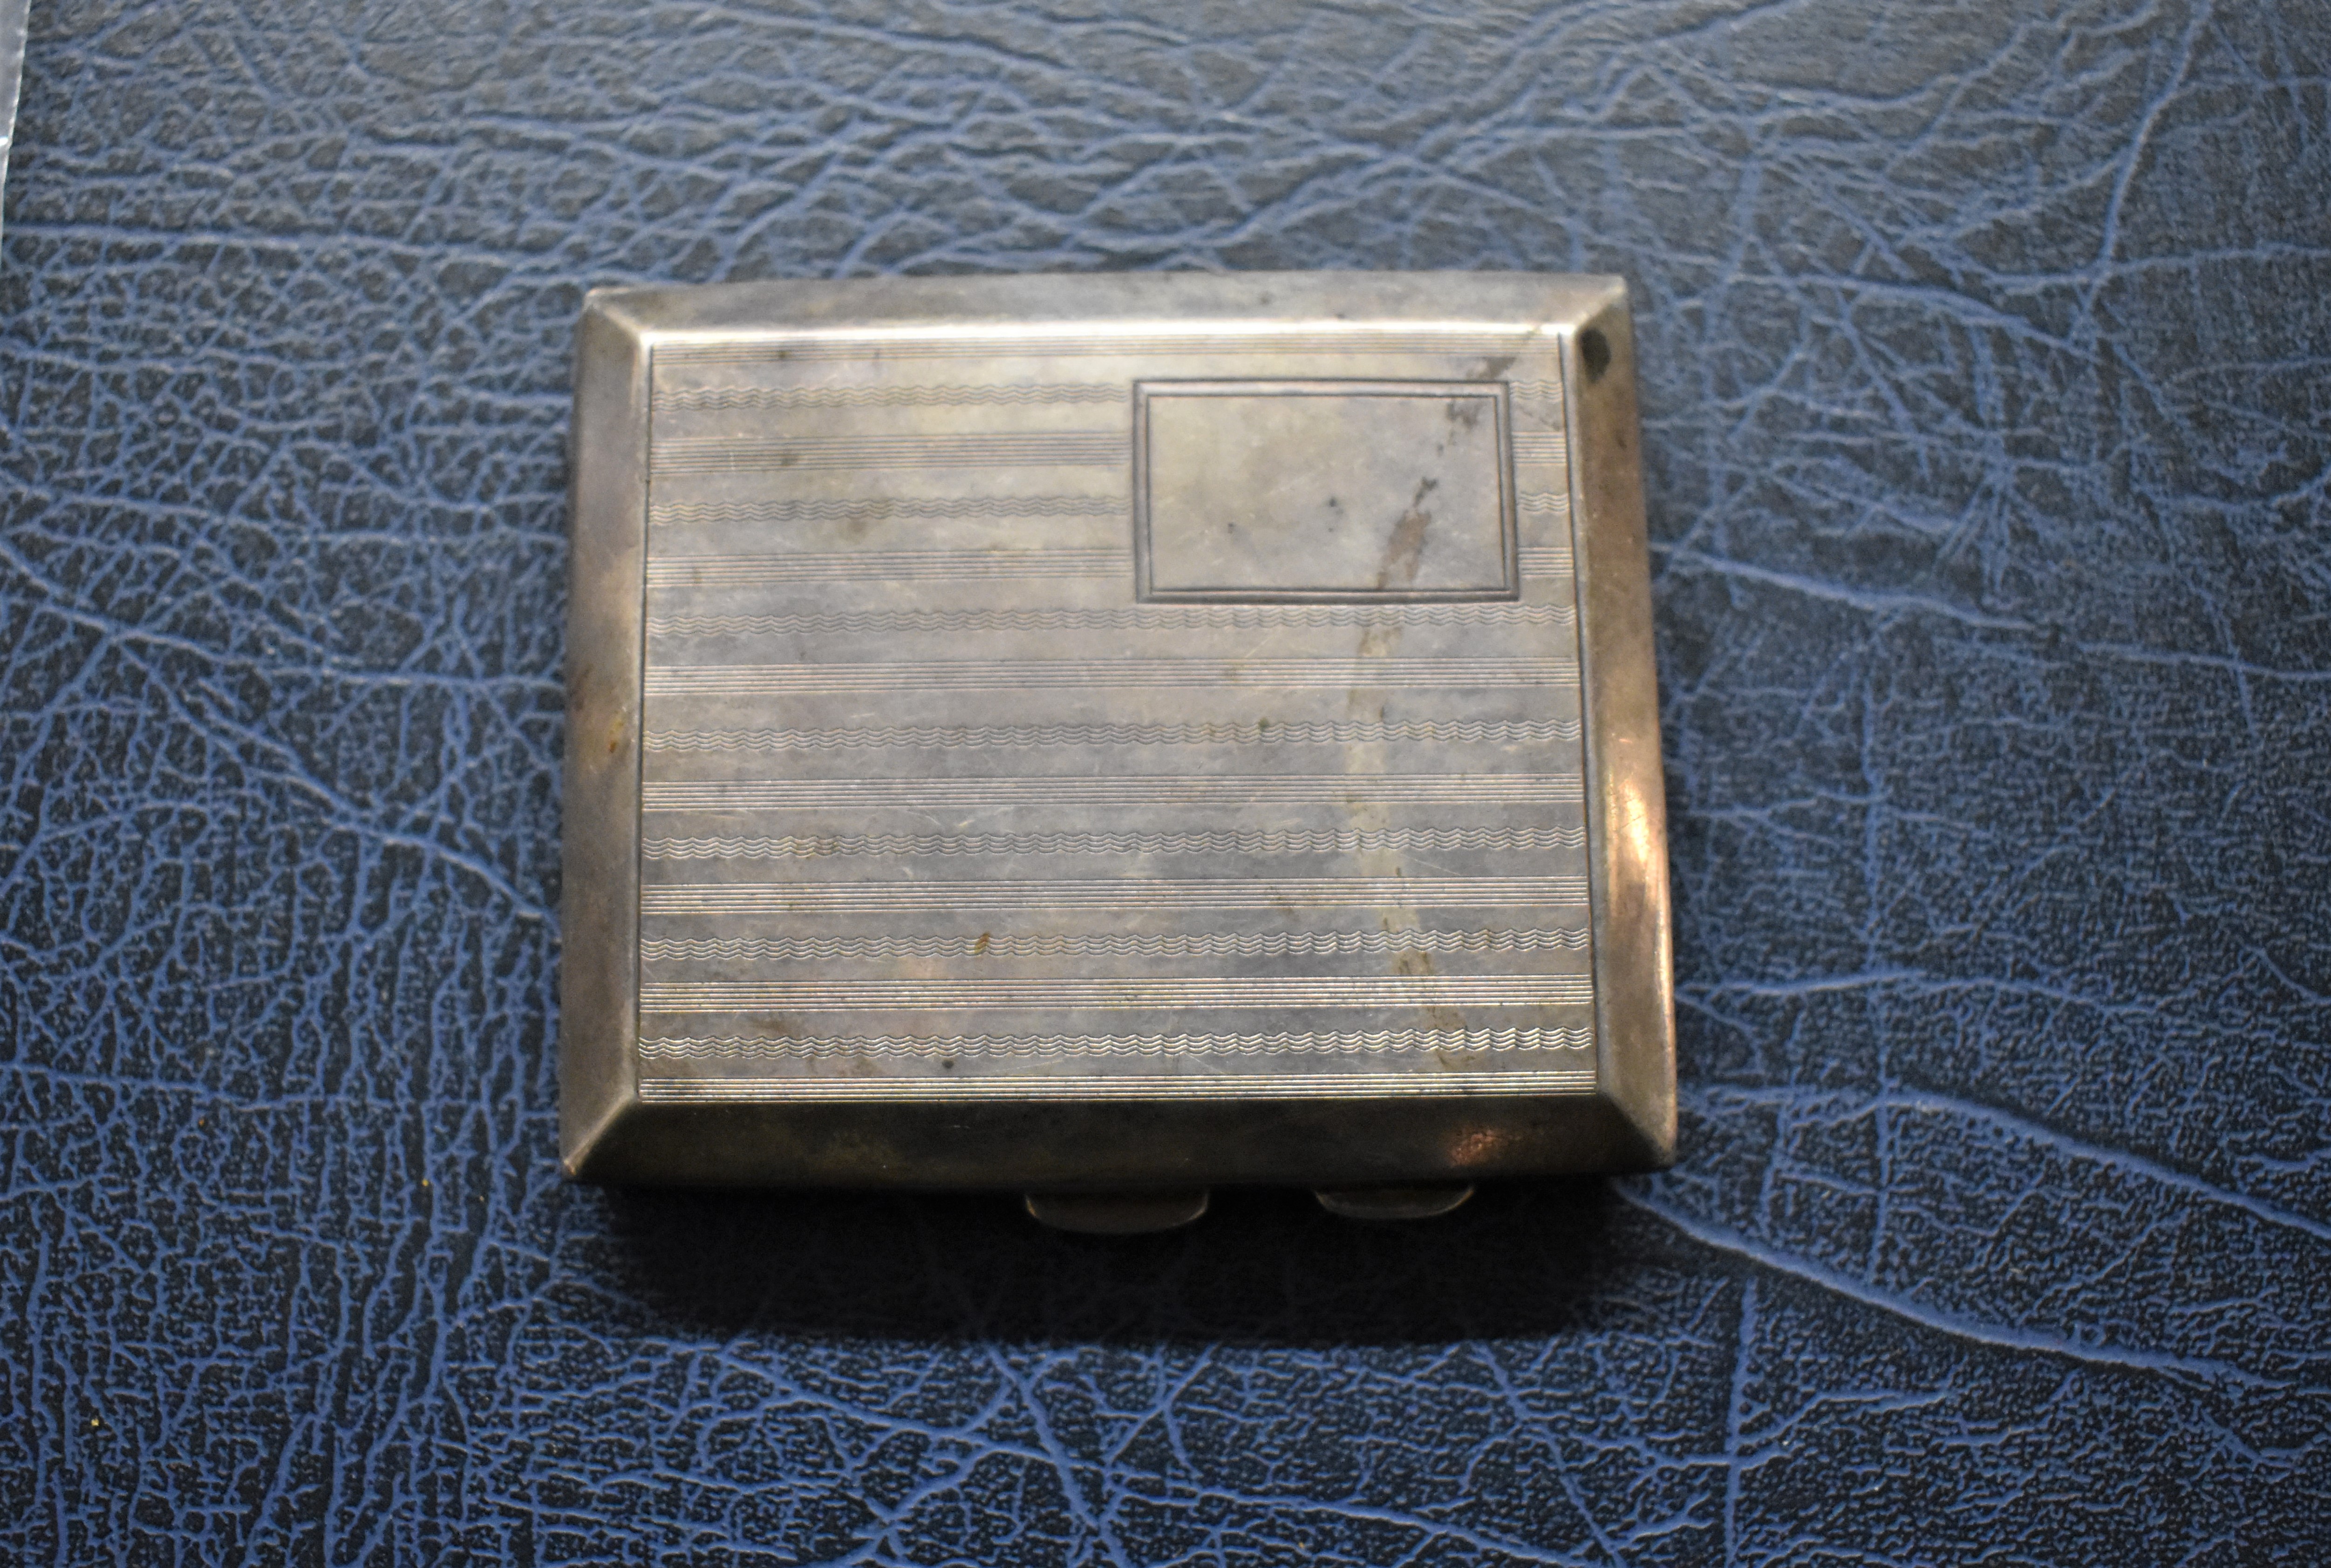 Silver Cigarette Case made M. H. Meyer, Ltd, Clerkenwell Road, London, 1912-1936. A nice piece in